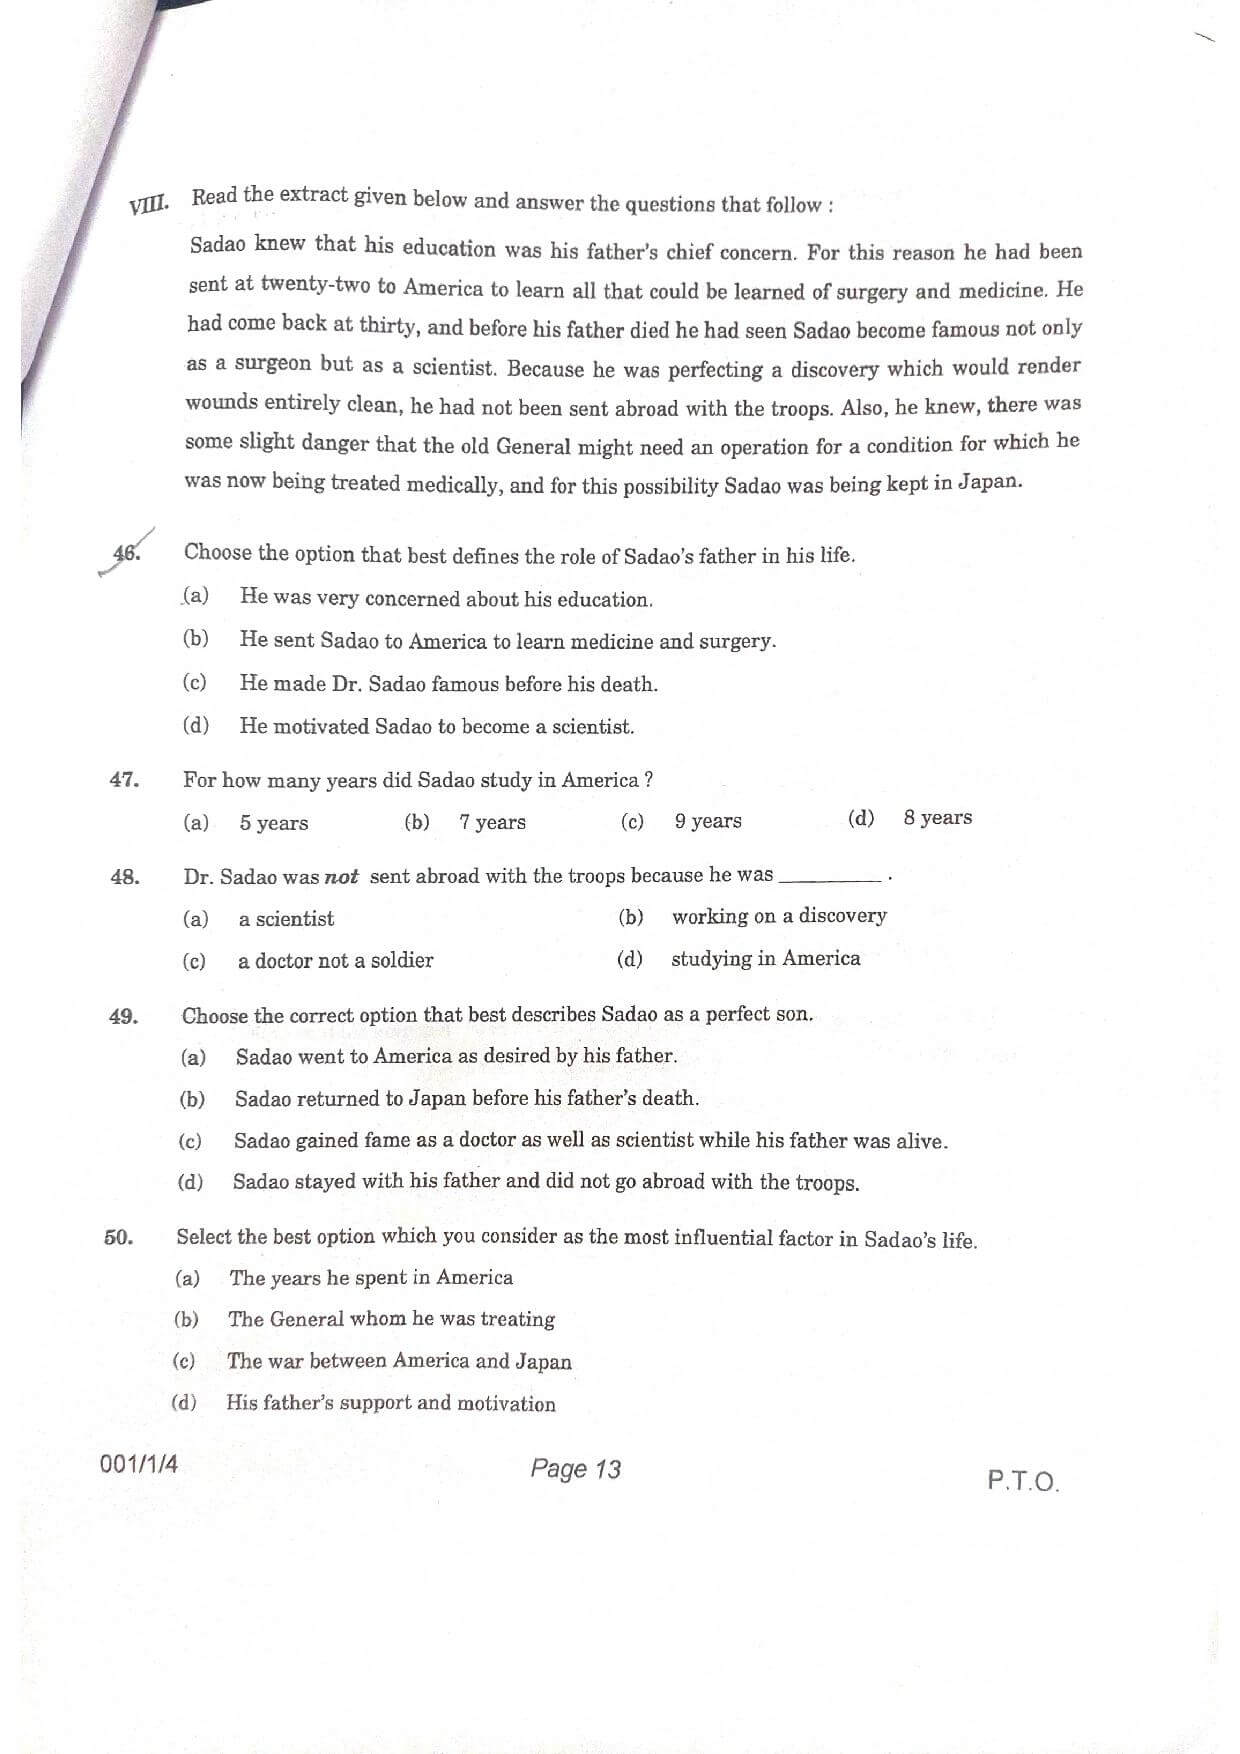 CBSE Class 12 English 2021 Question Paper 13